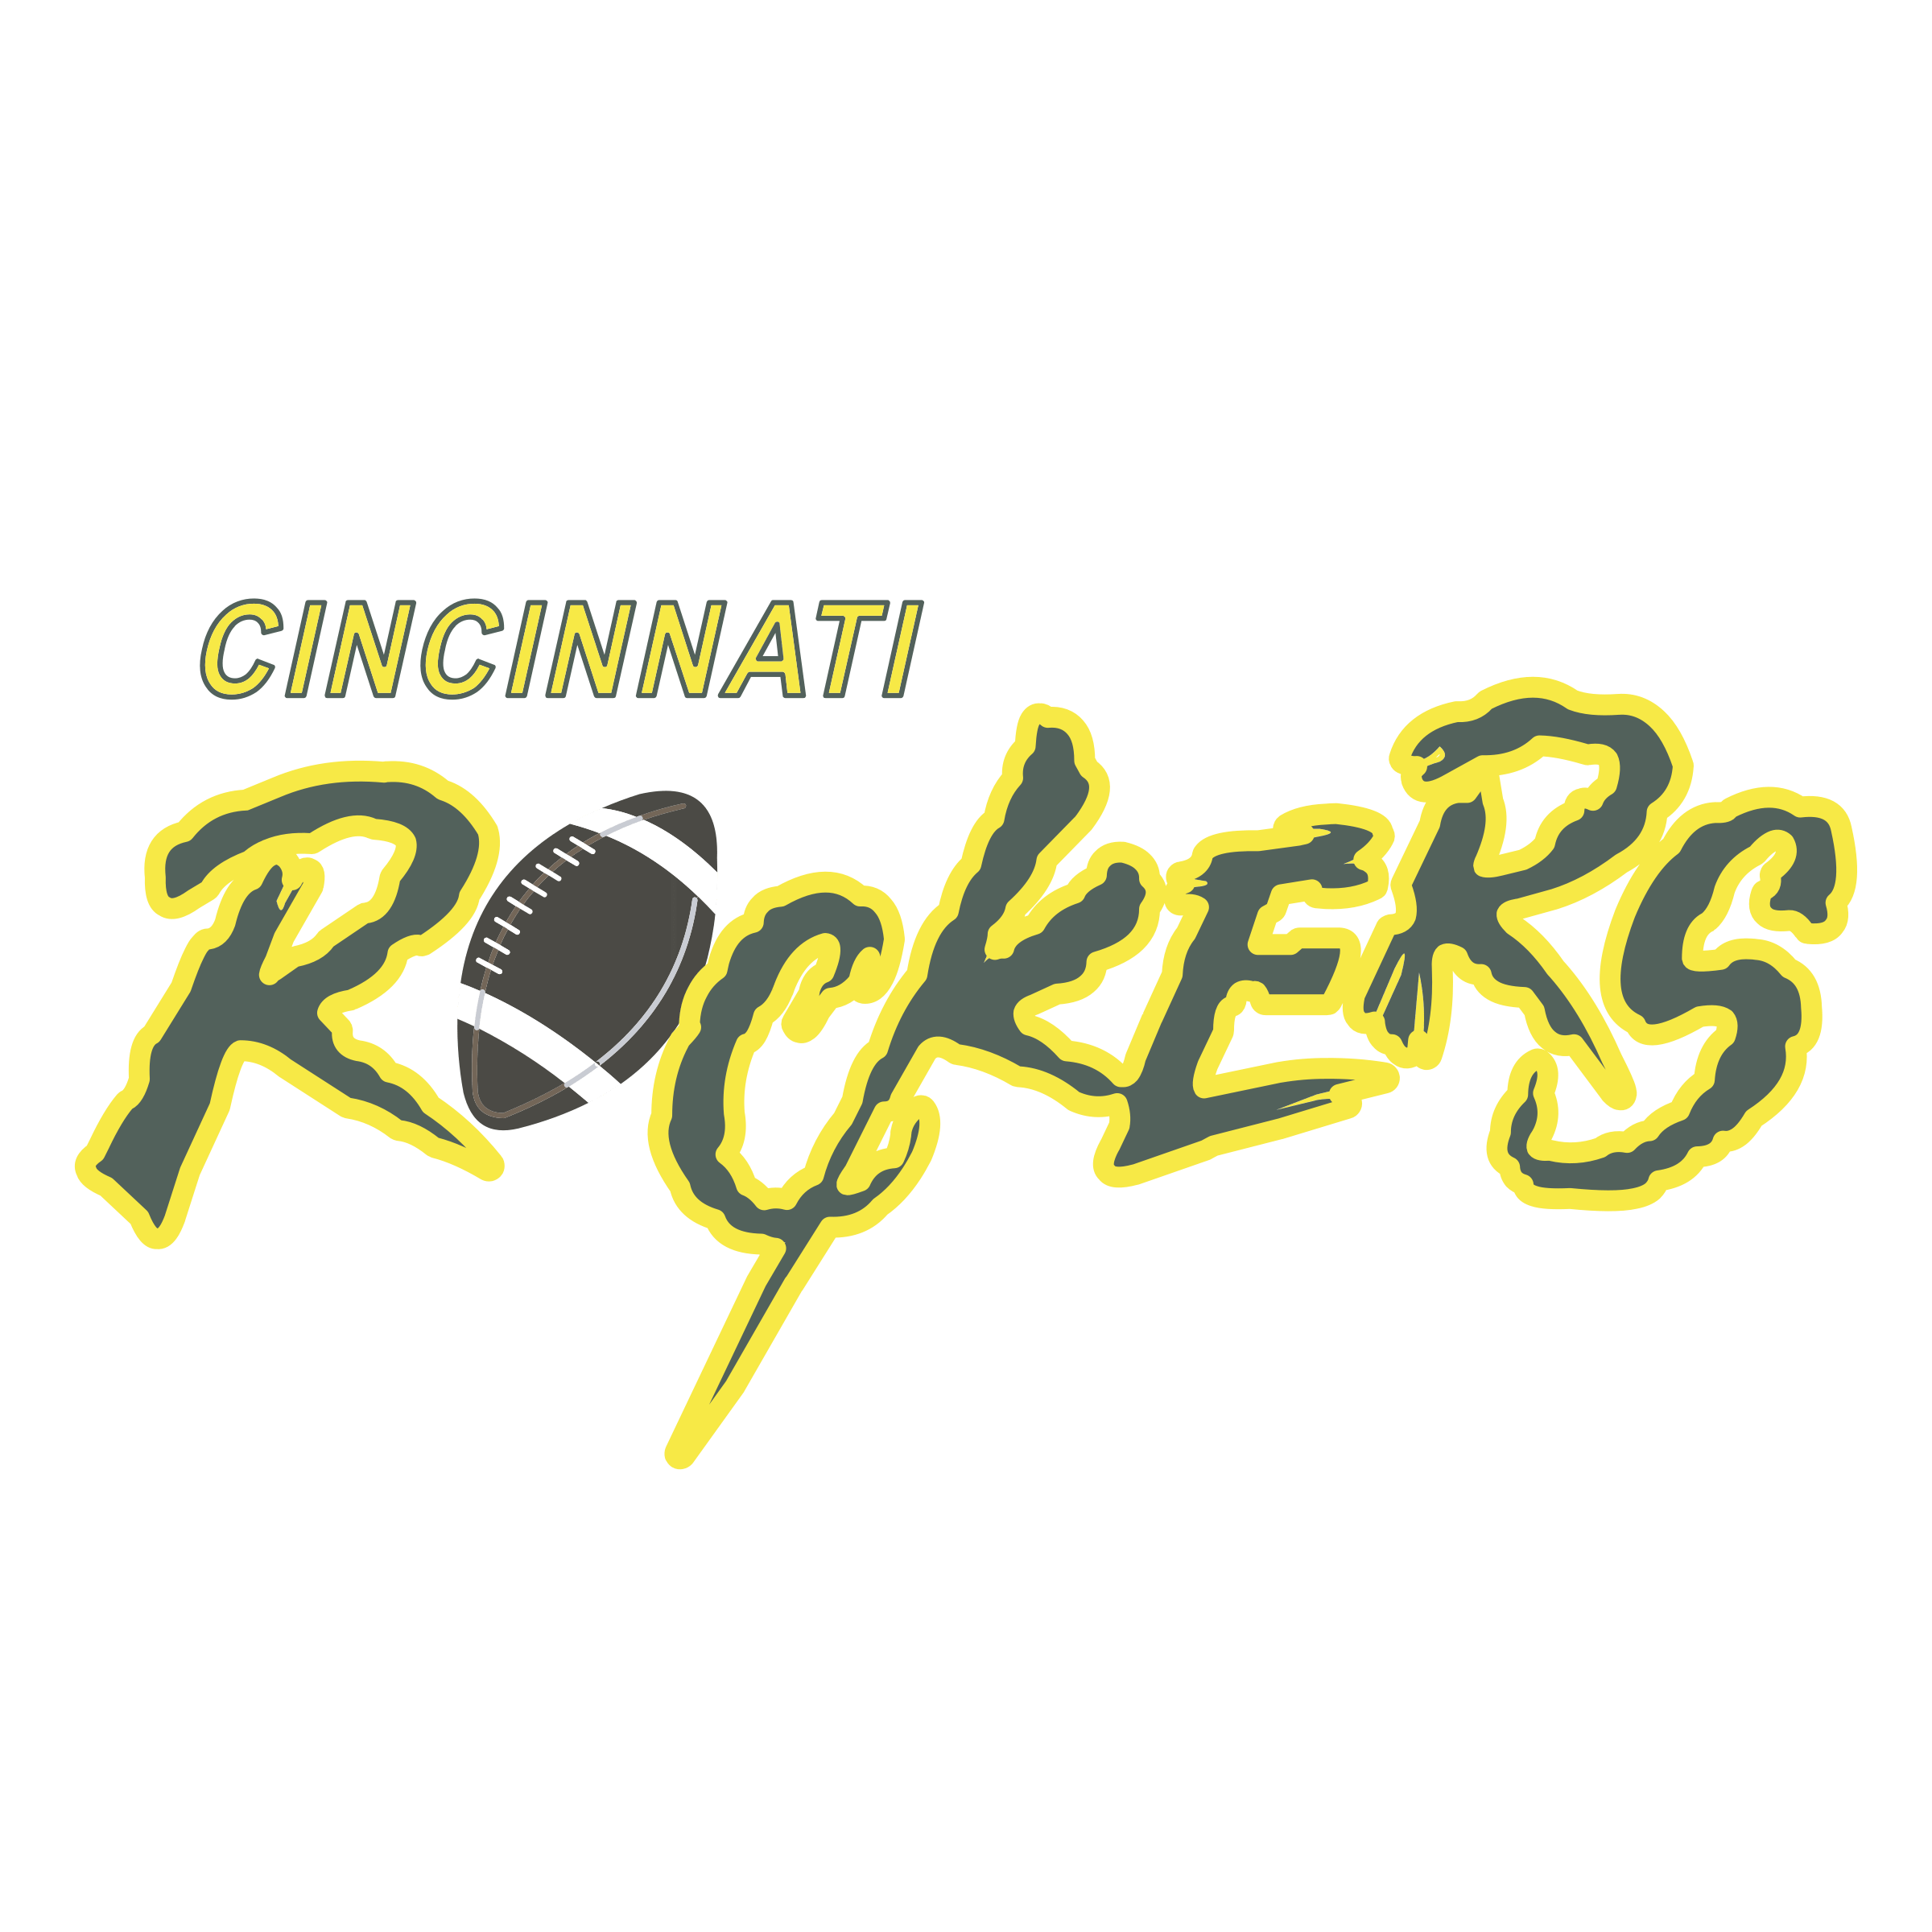 Rockers Logo - Cincinnati Rockers Logo PNG Transparent & SVG Vector - Freebie Supply